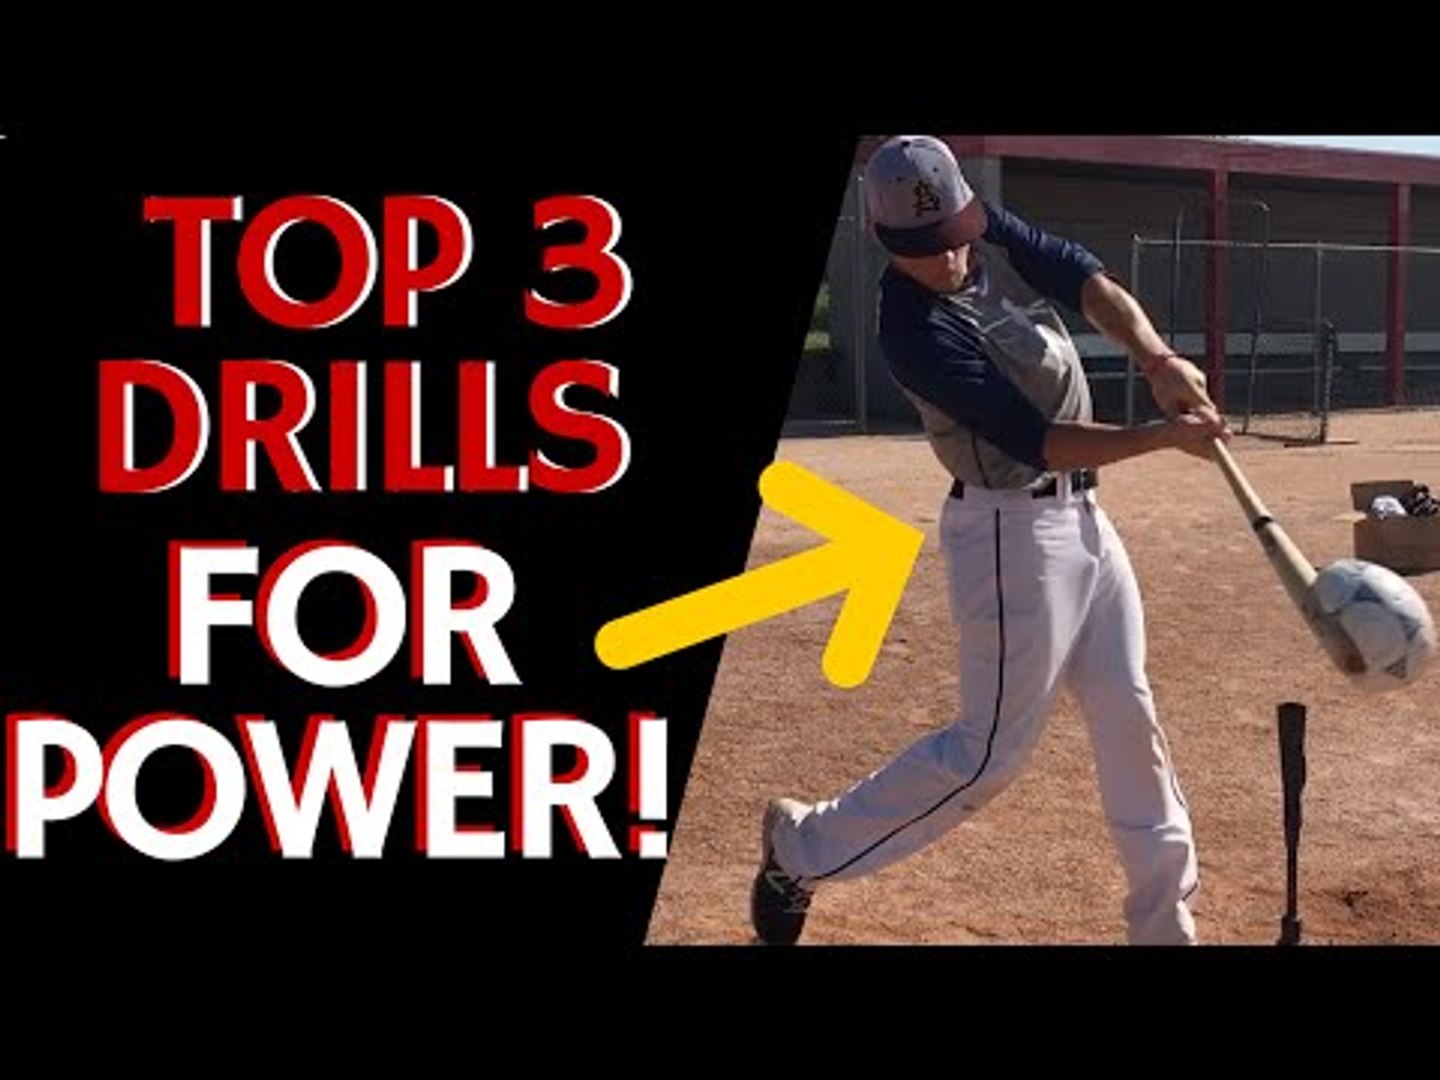 Top 3 Drills for Power! - Baseball Hitting Drills - video Dailymotion